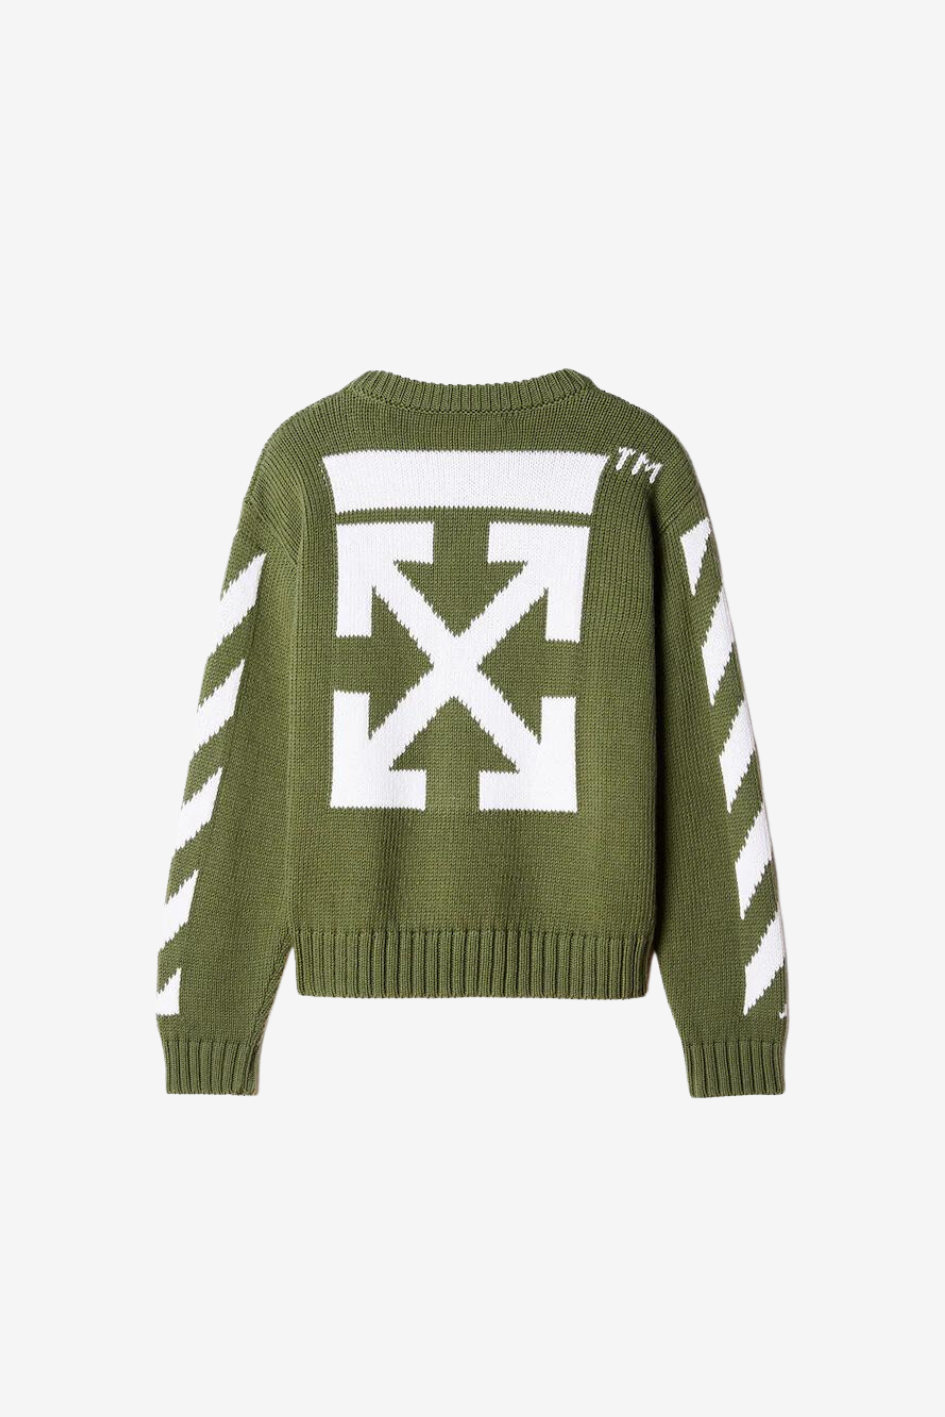 Classic Arrow Tab Knit Crew Military Sweater